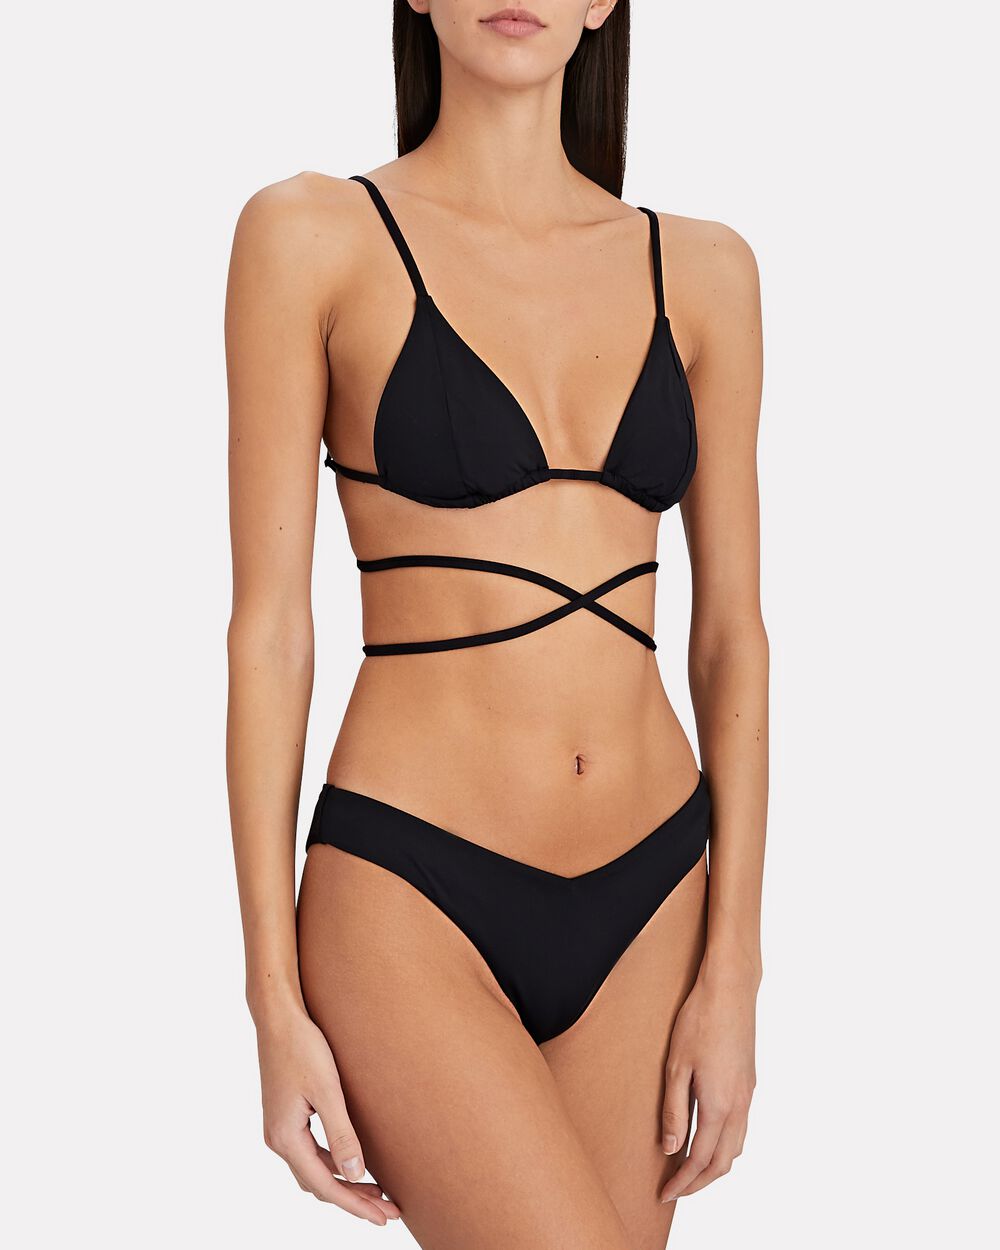 Tango Wrap Bikini Top. Choose fit & how you tie